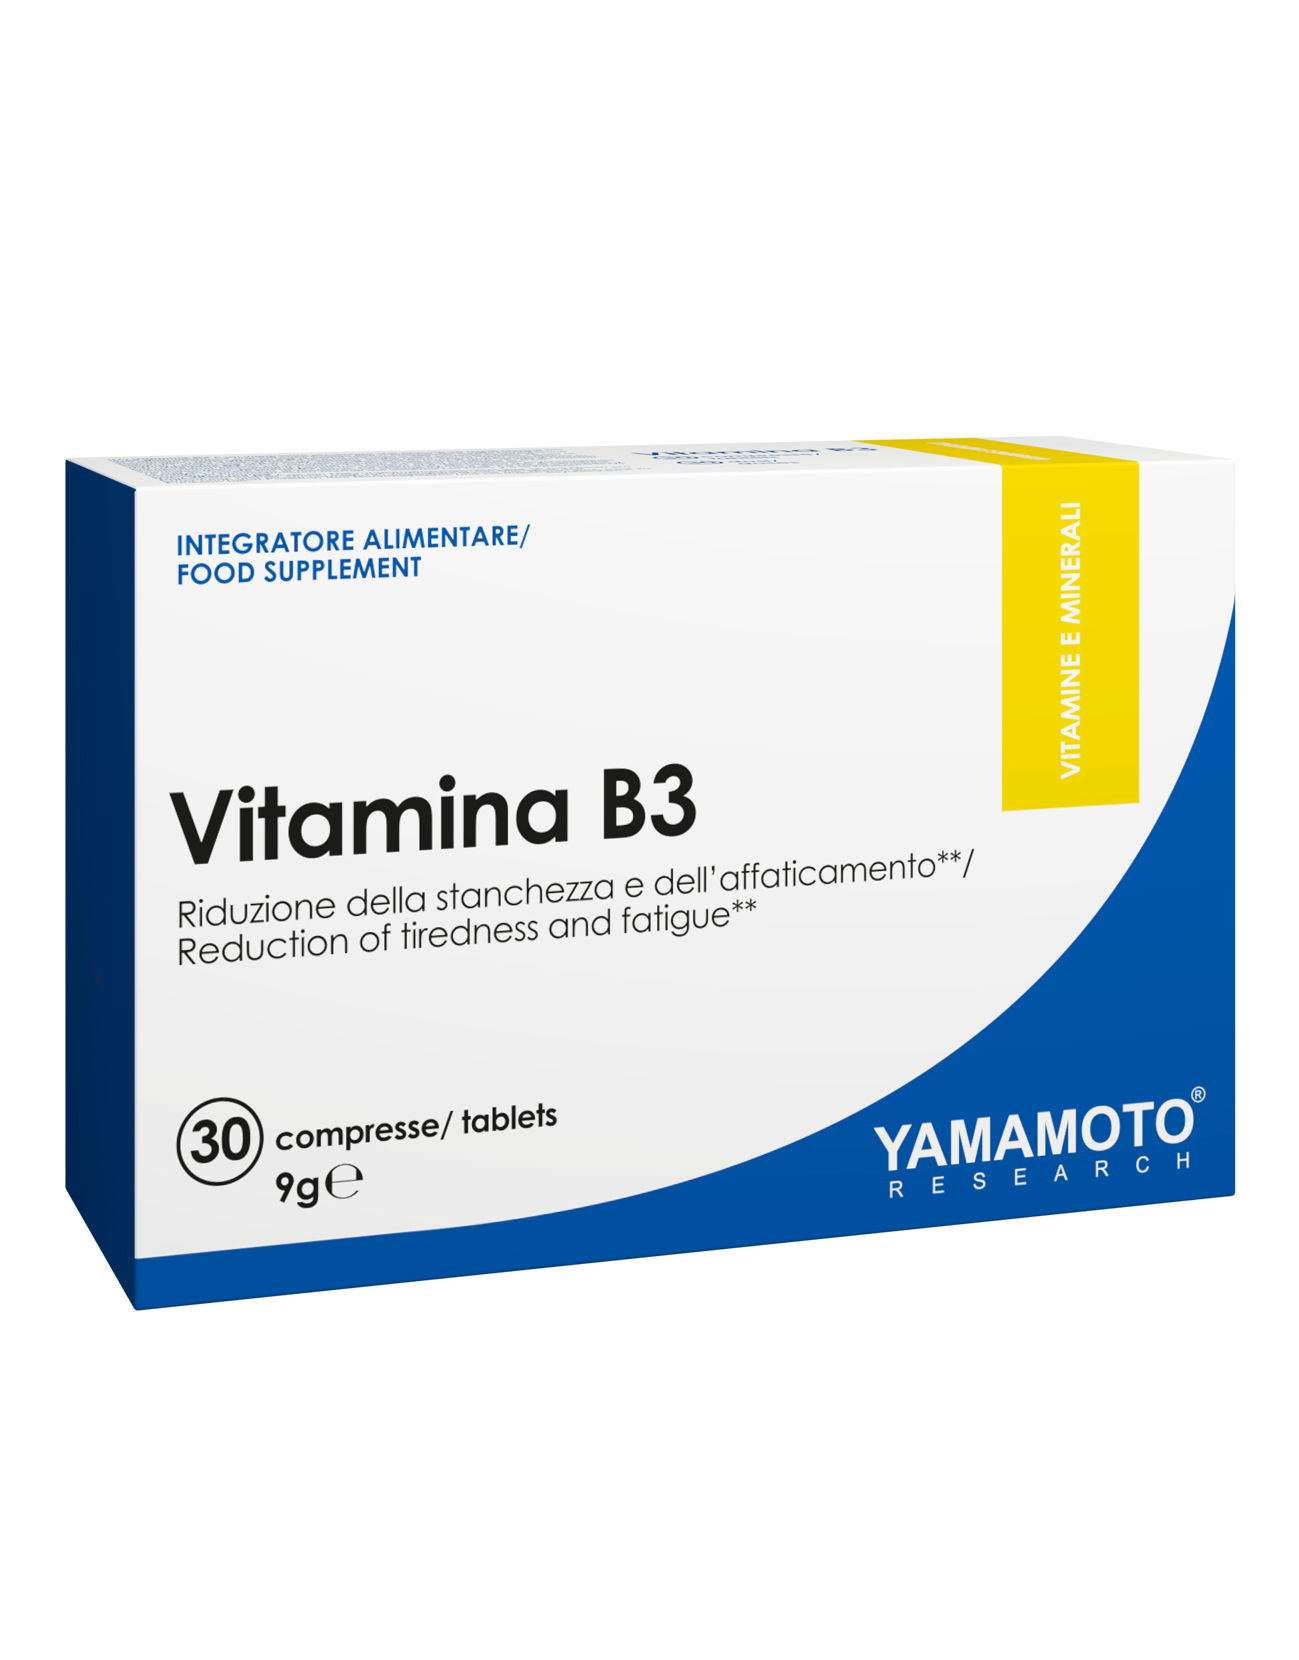 Vitamina B3 di Yamamoto research, 30 compresse 